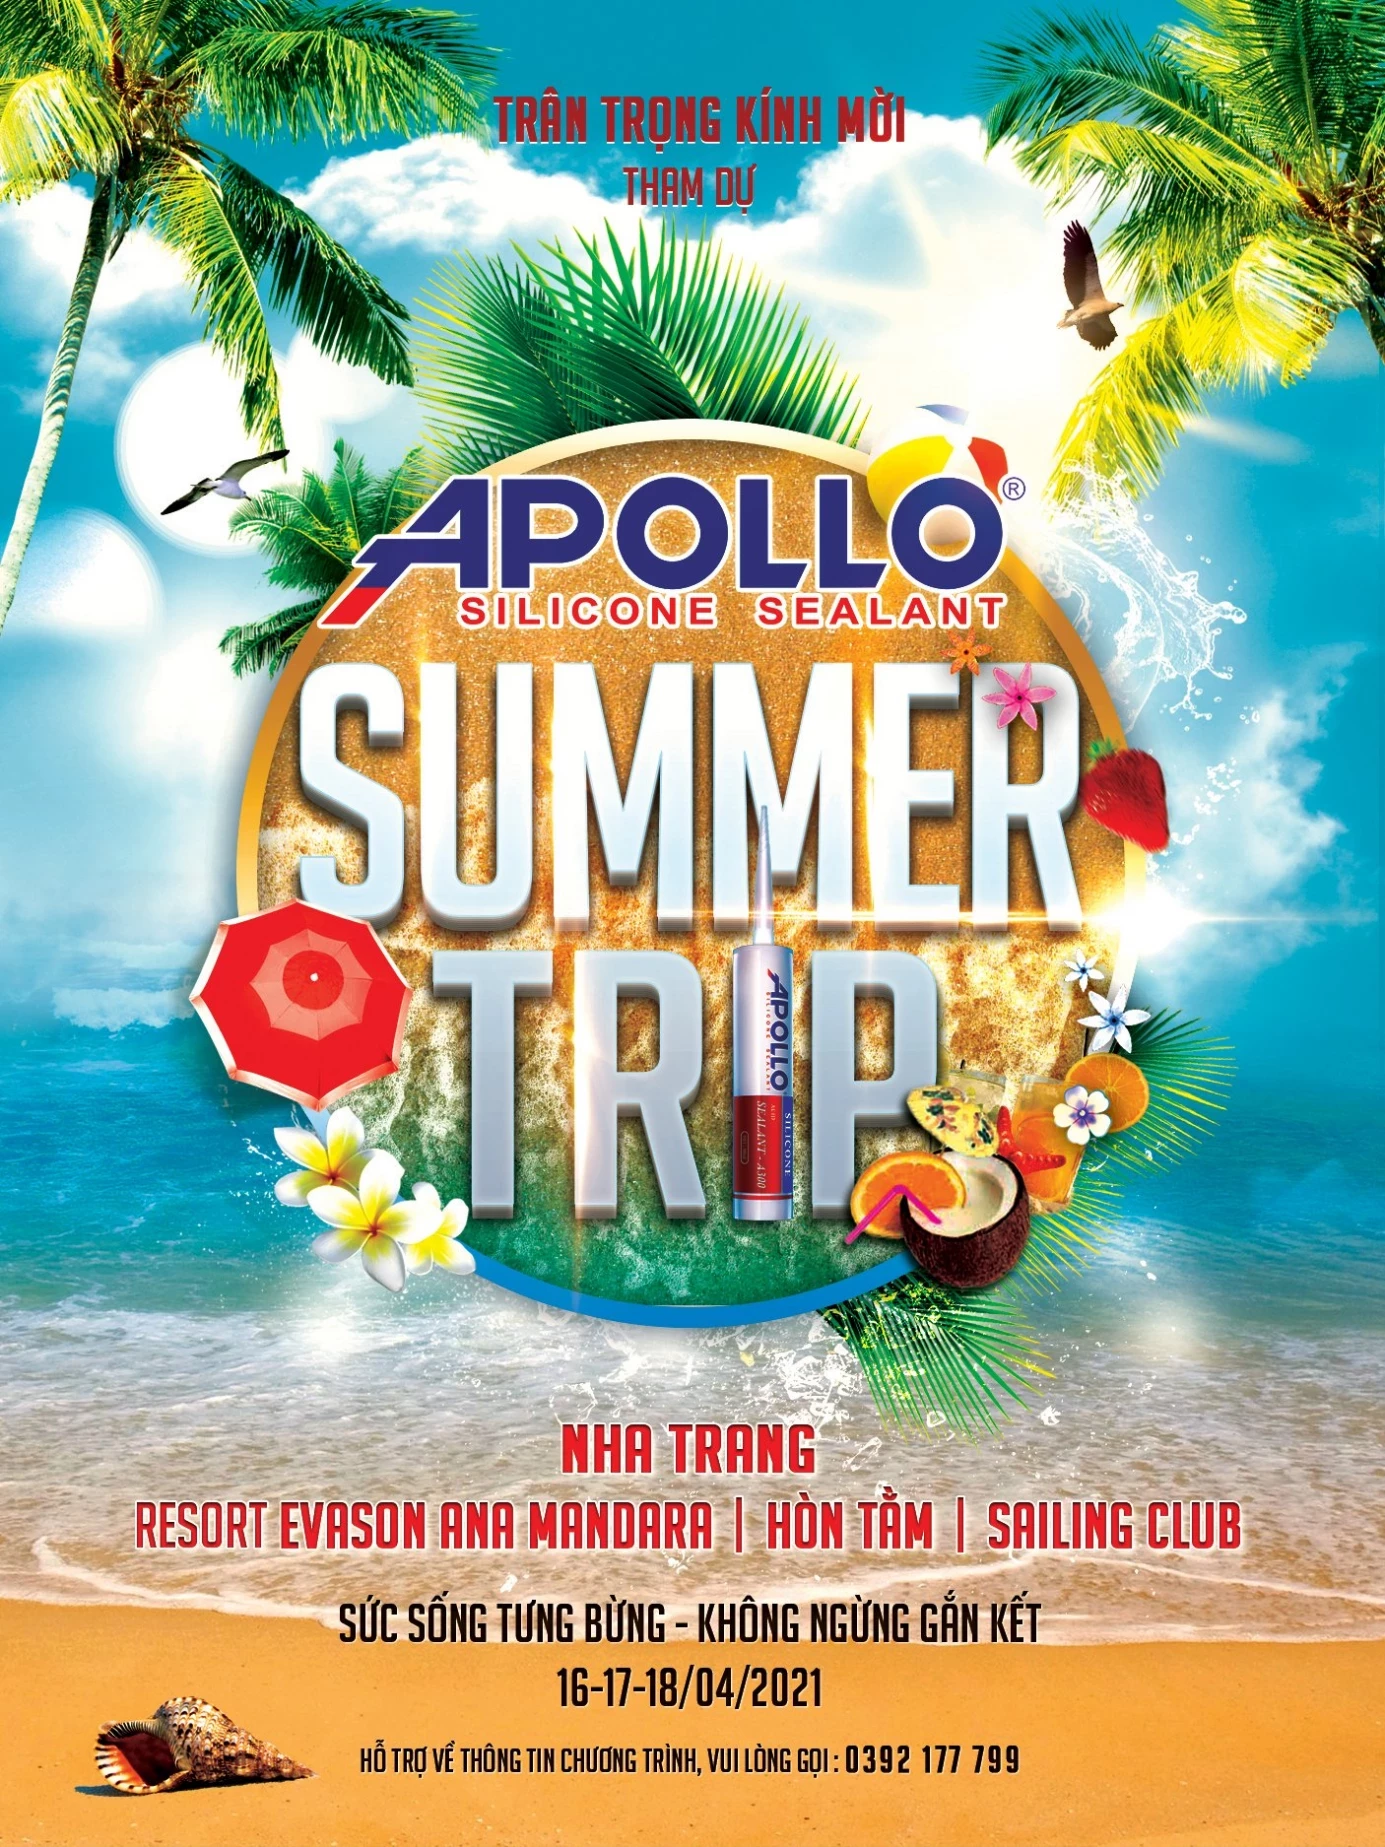 Apollo Summer Trip 2021 - Bonding together